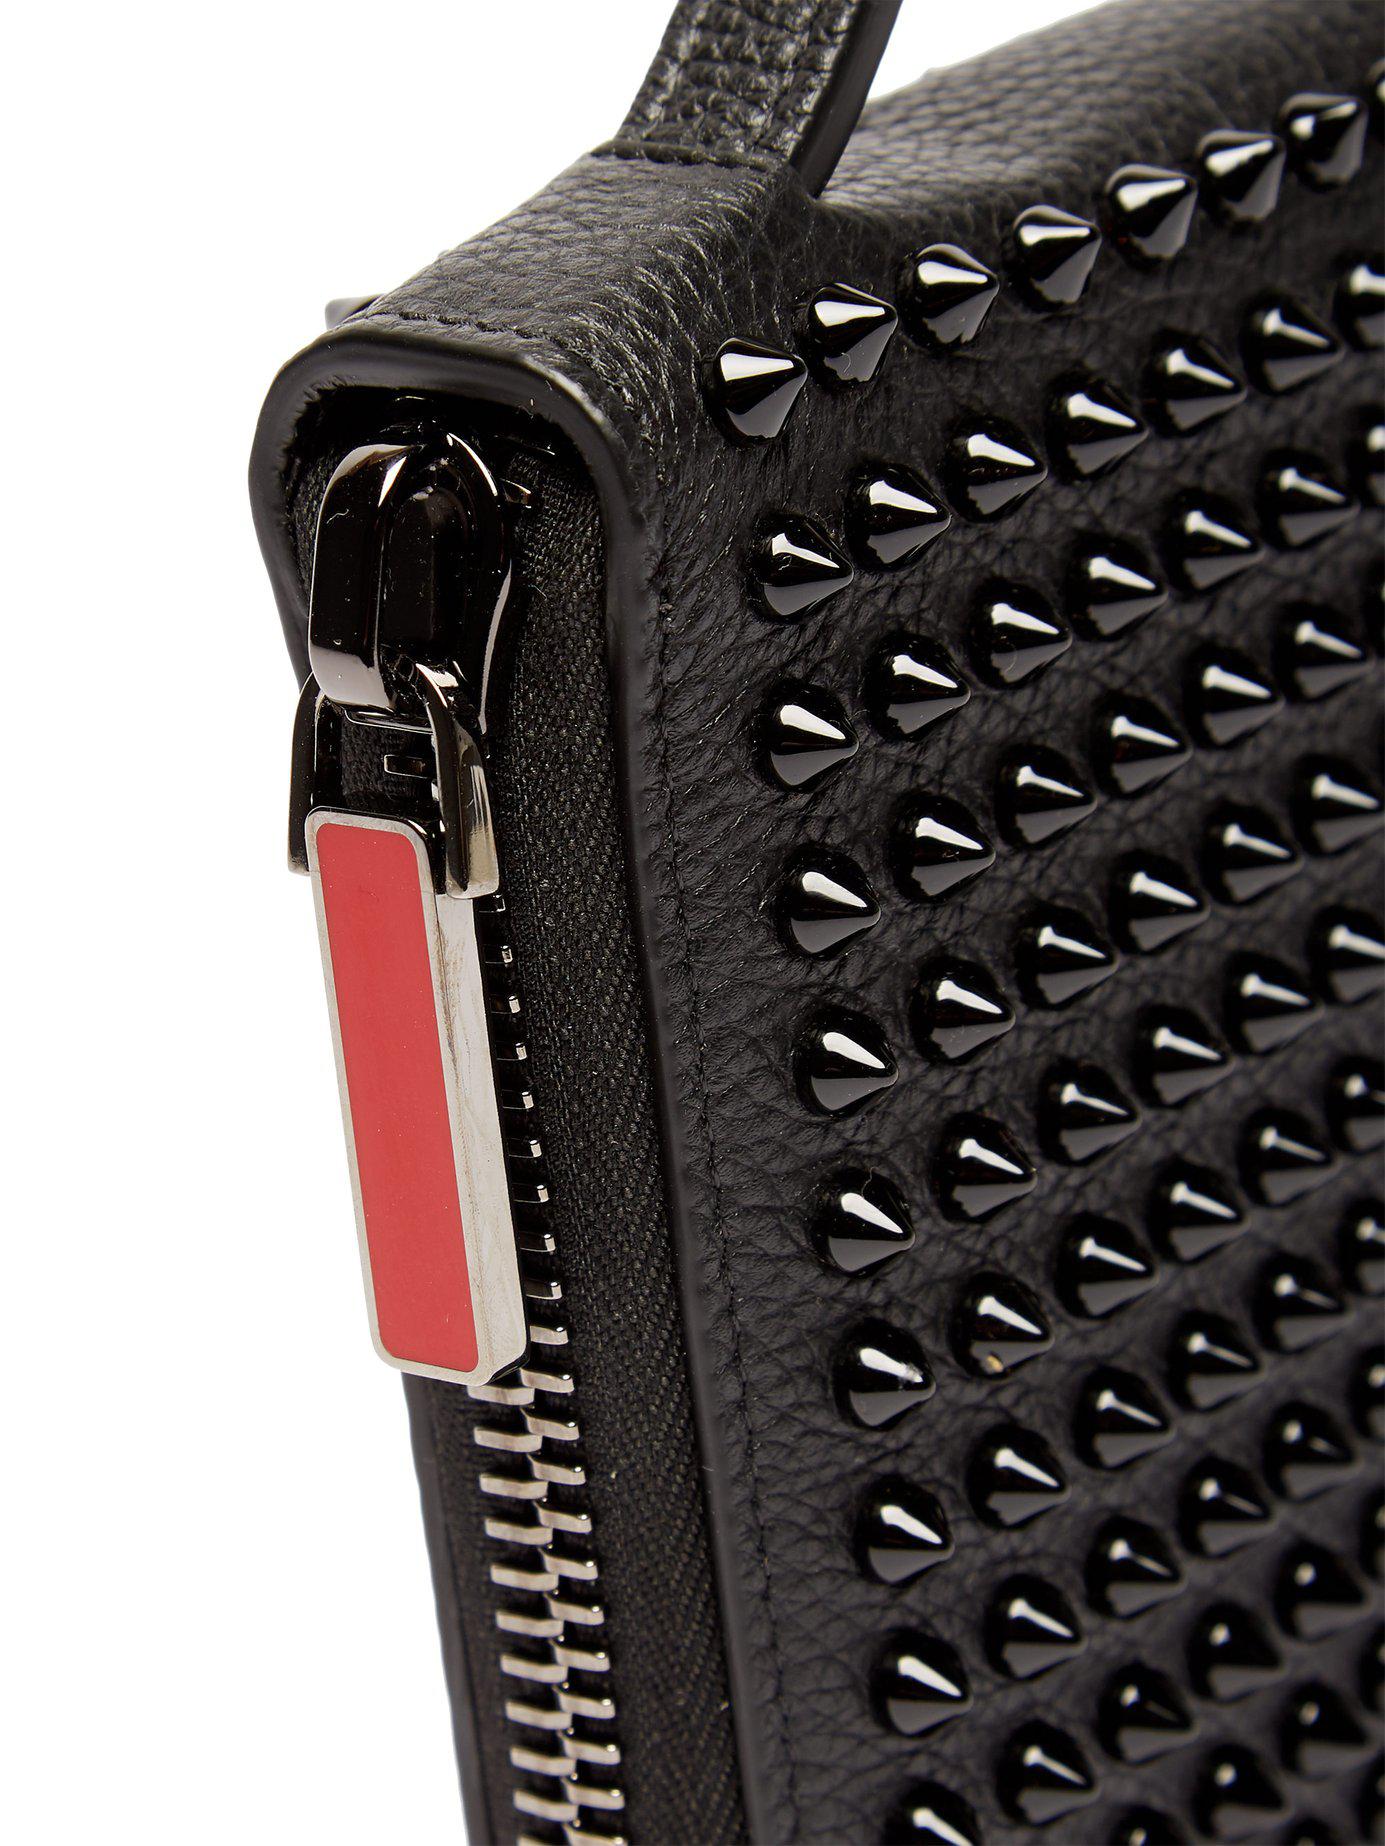 Christian Louboutin Black Panettone Wallet Spike Leather Zippy Wall1et CL82K